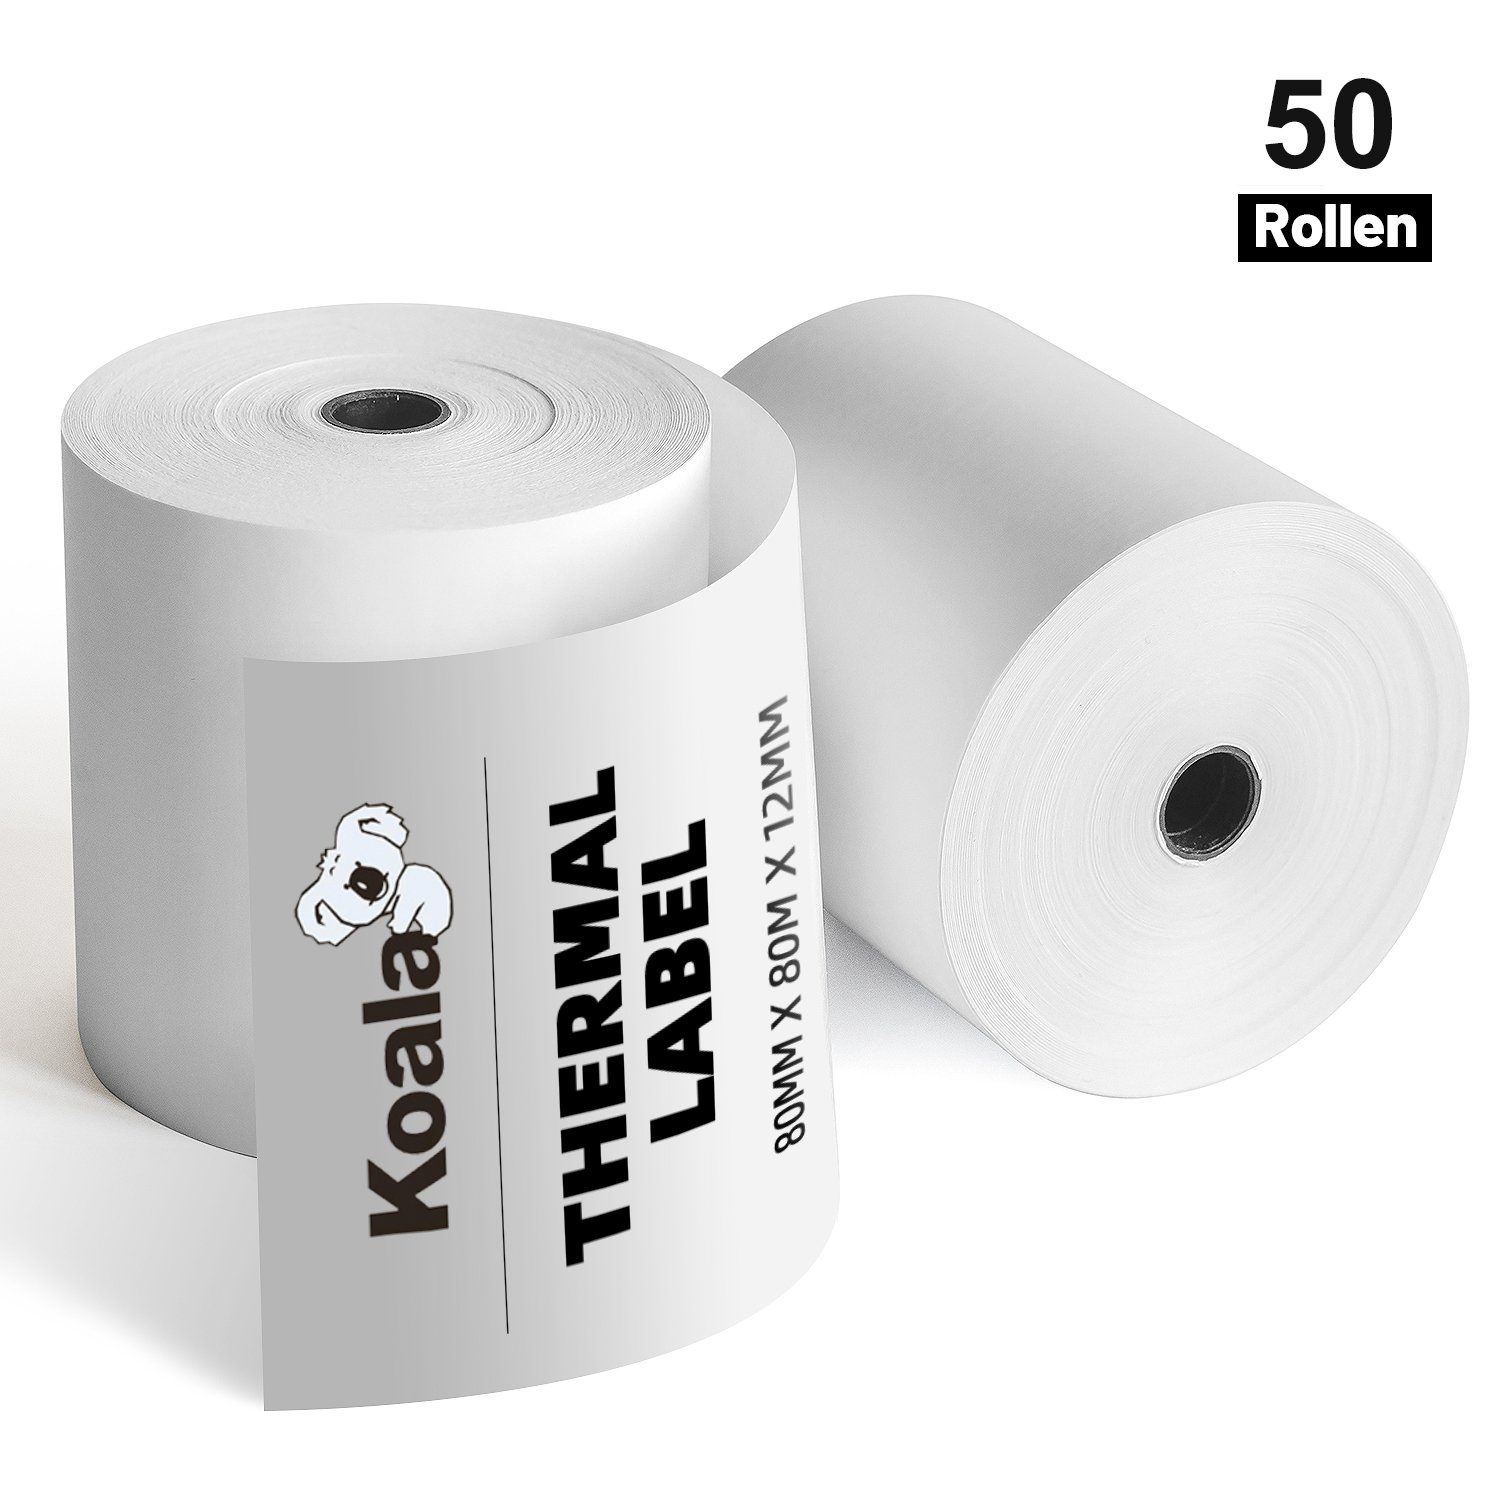 mm 80 Koala Bonrolle Rollen Drucker 80x Kassen, Etikettenpapier für Thermopapier 50